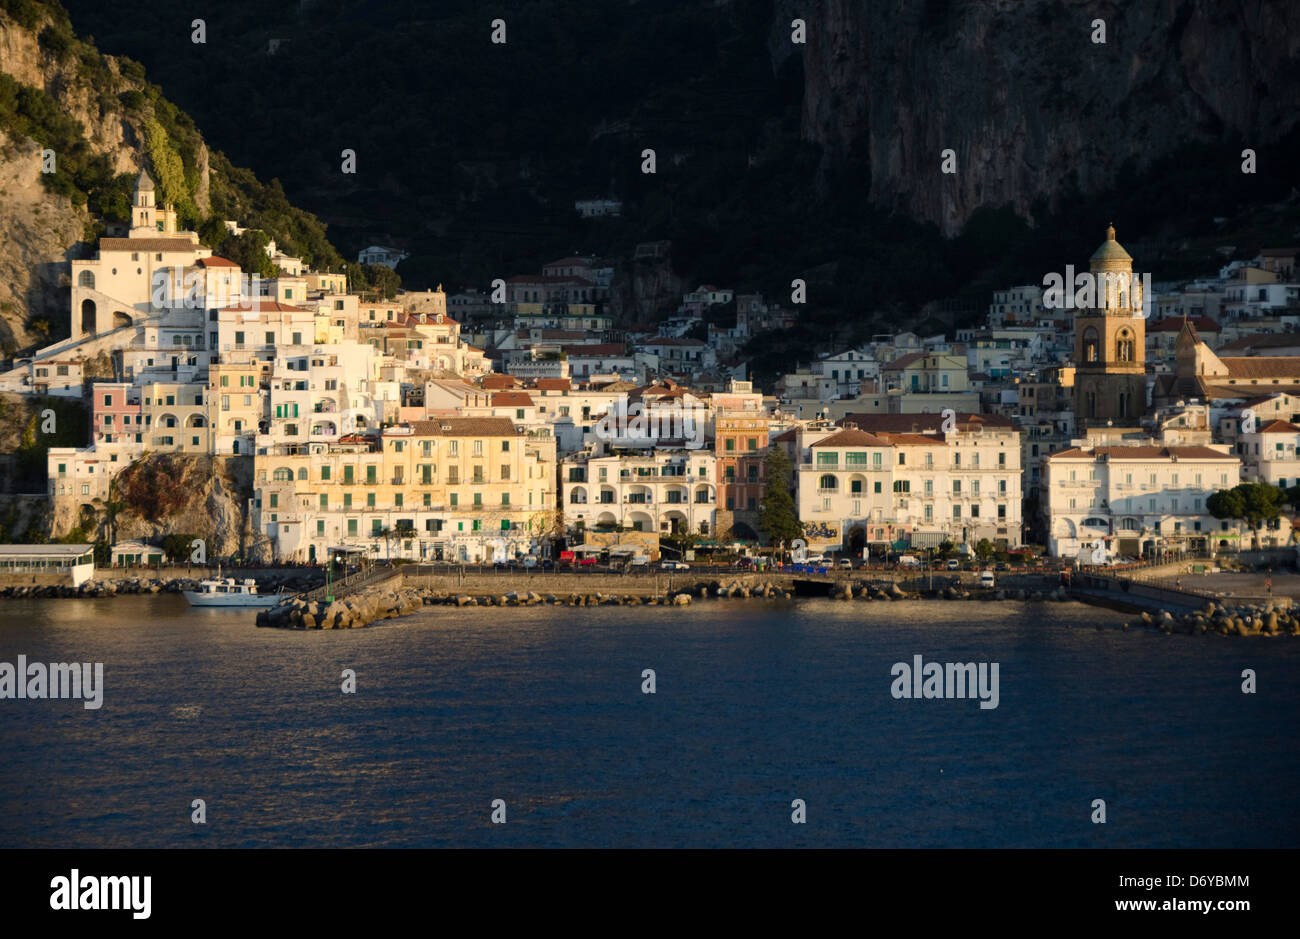 Italy, Amalfi harbor Stock Photo - Alamy